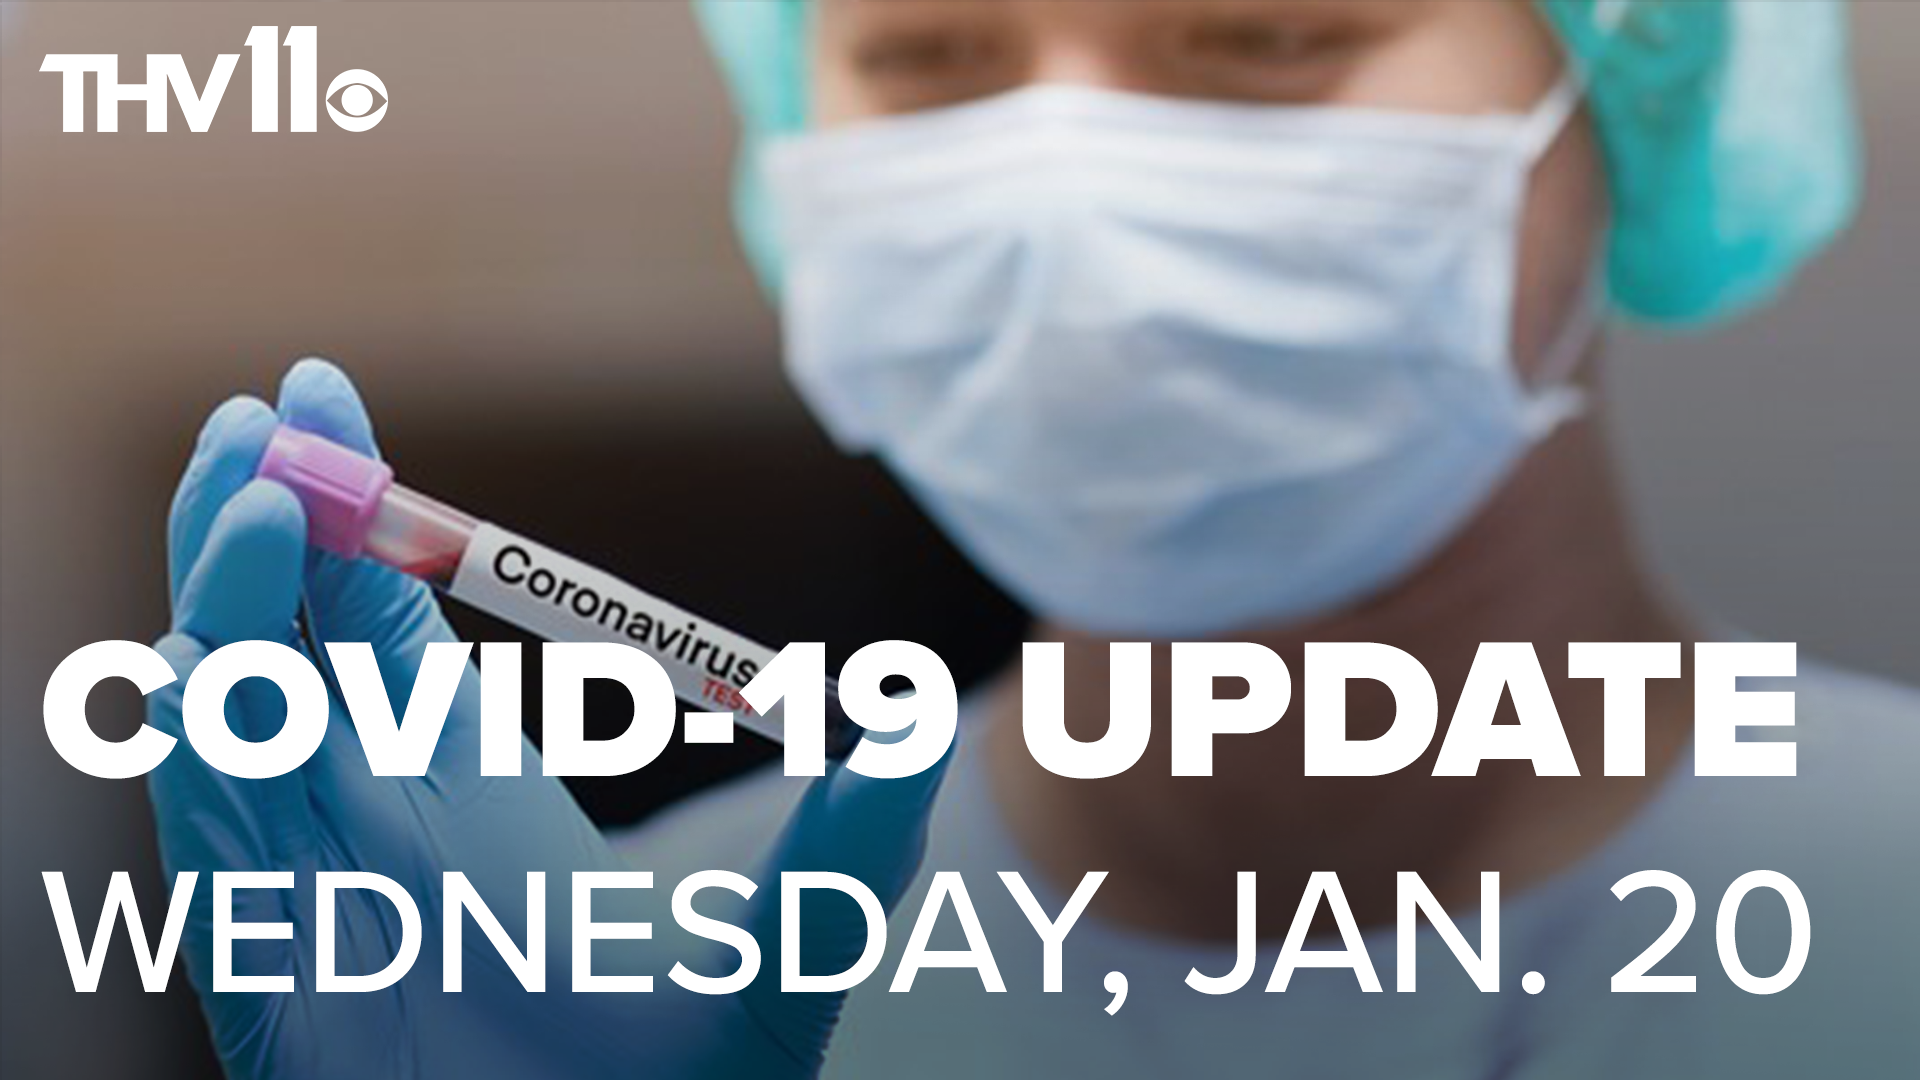 Craig O'Neill provides a coronavirus update for Arkansas on Wednesday, January 20.